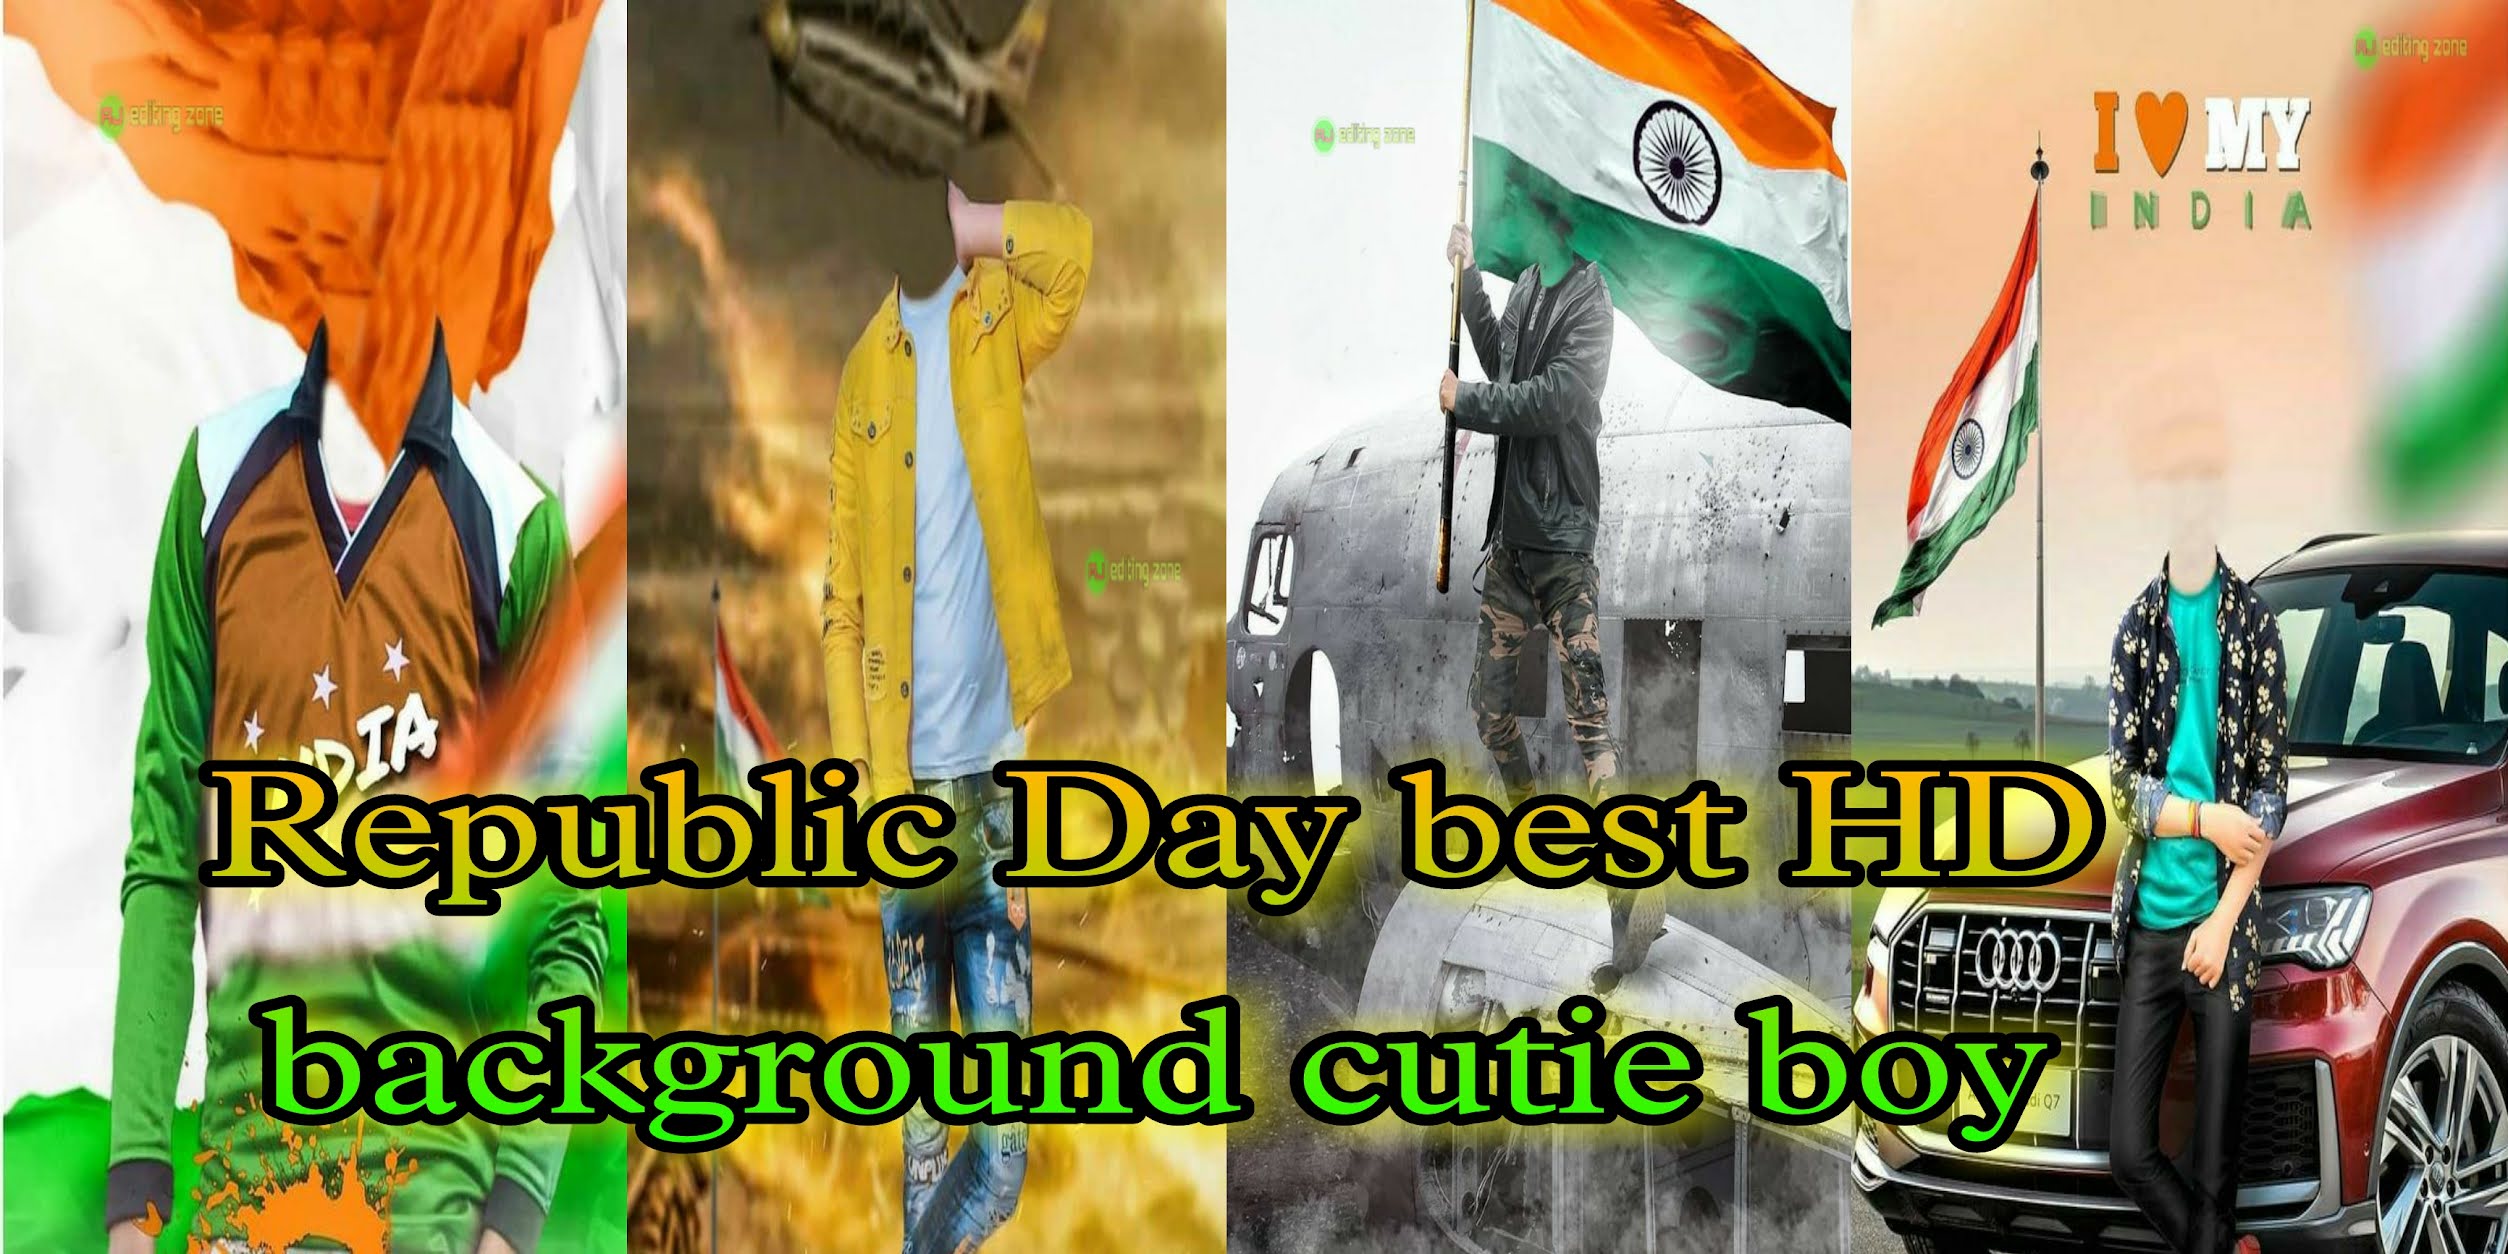 Cute boy Republic Day 15 August HD quality ke background free download